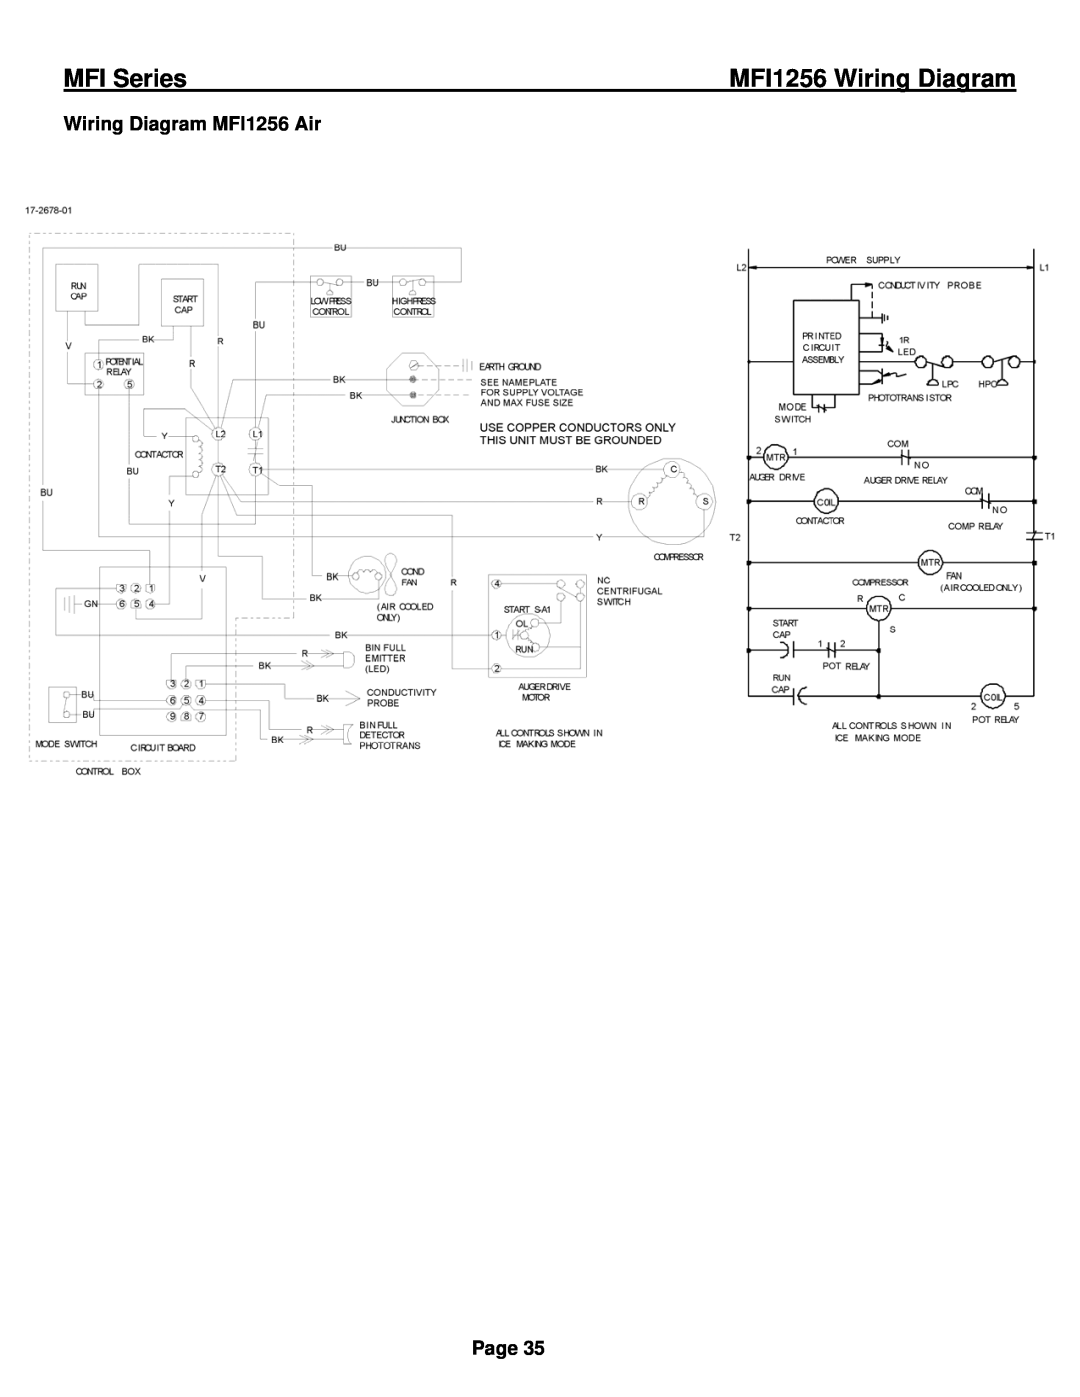 Ice-O-Matic installation manual MFI1256 Wiring Diagram, Wiring Diagram MFI1256 Air, MFI Series, Page 